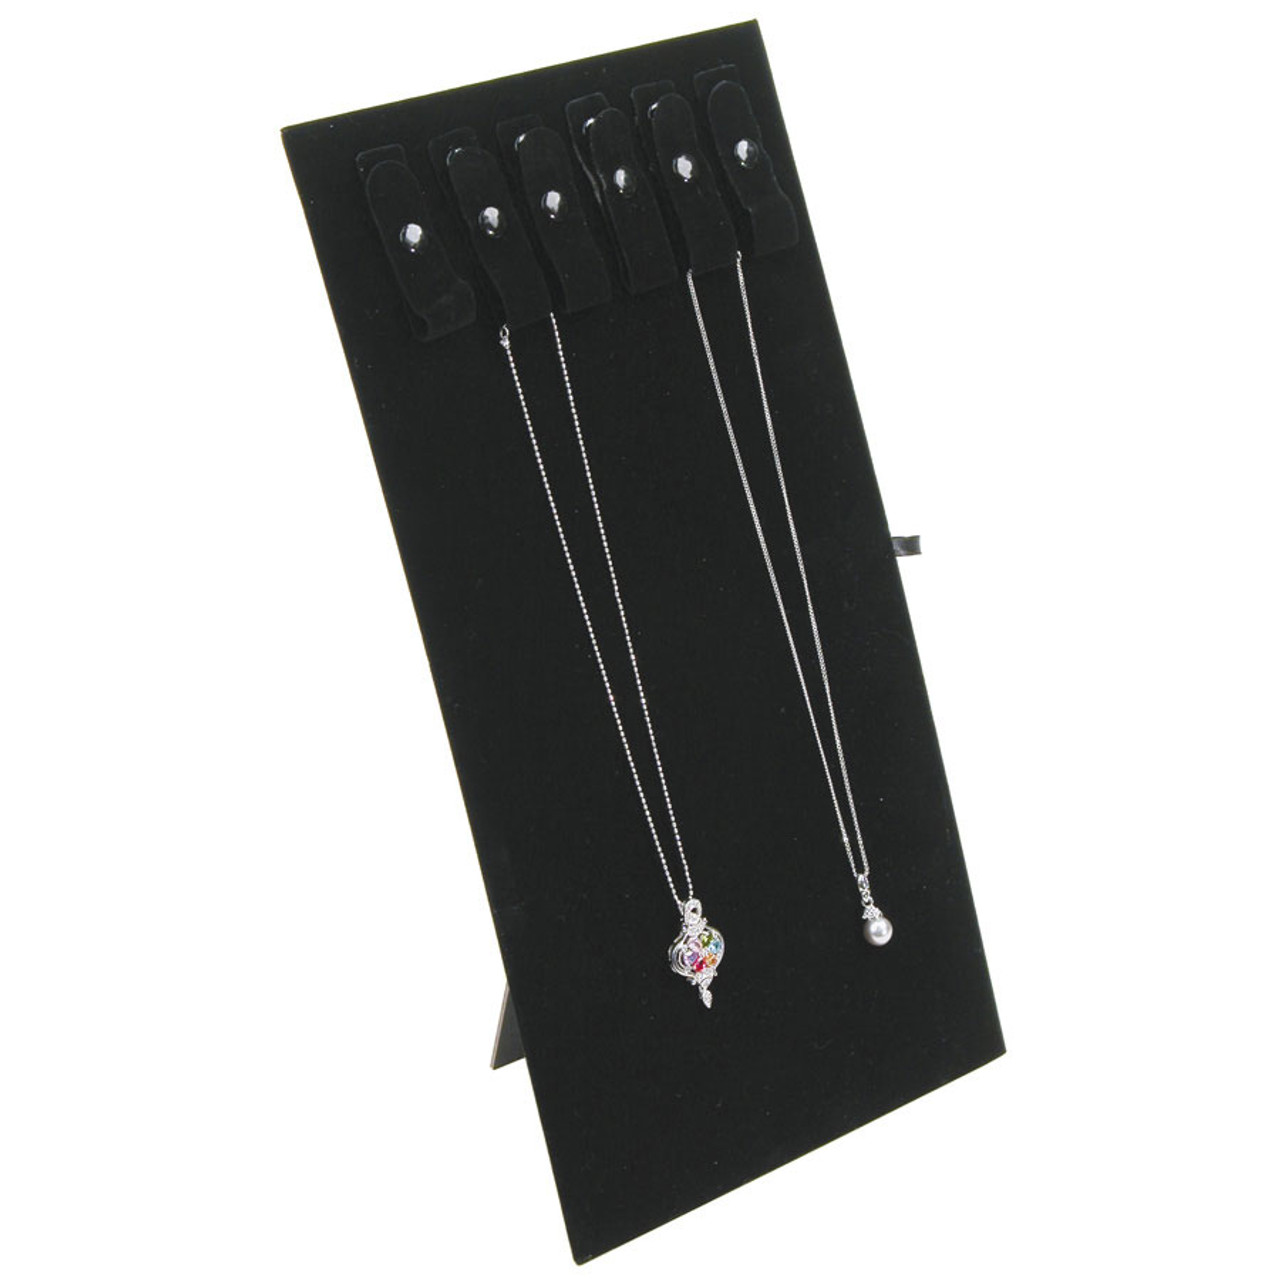 2 x Jewelry Display Pad Insert Linen Velvet  Fits Standard Trays & Case 